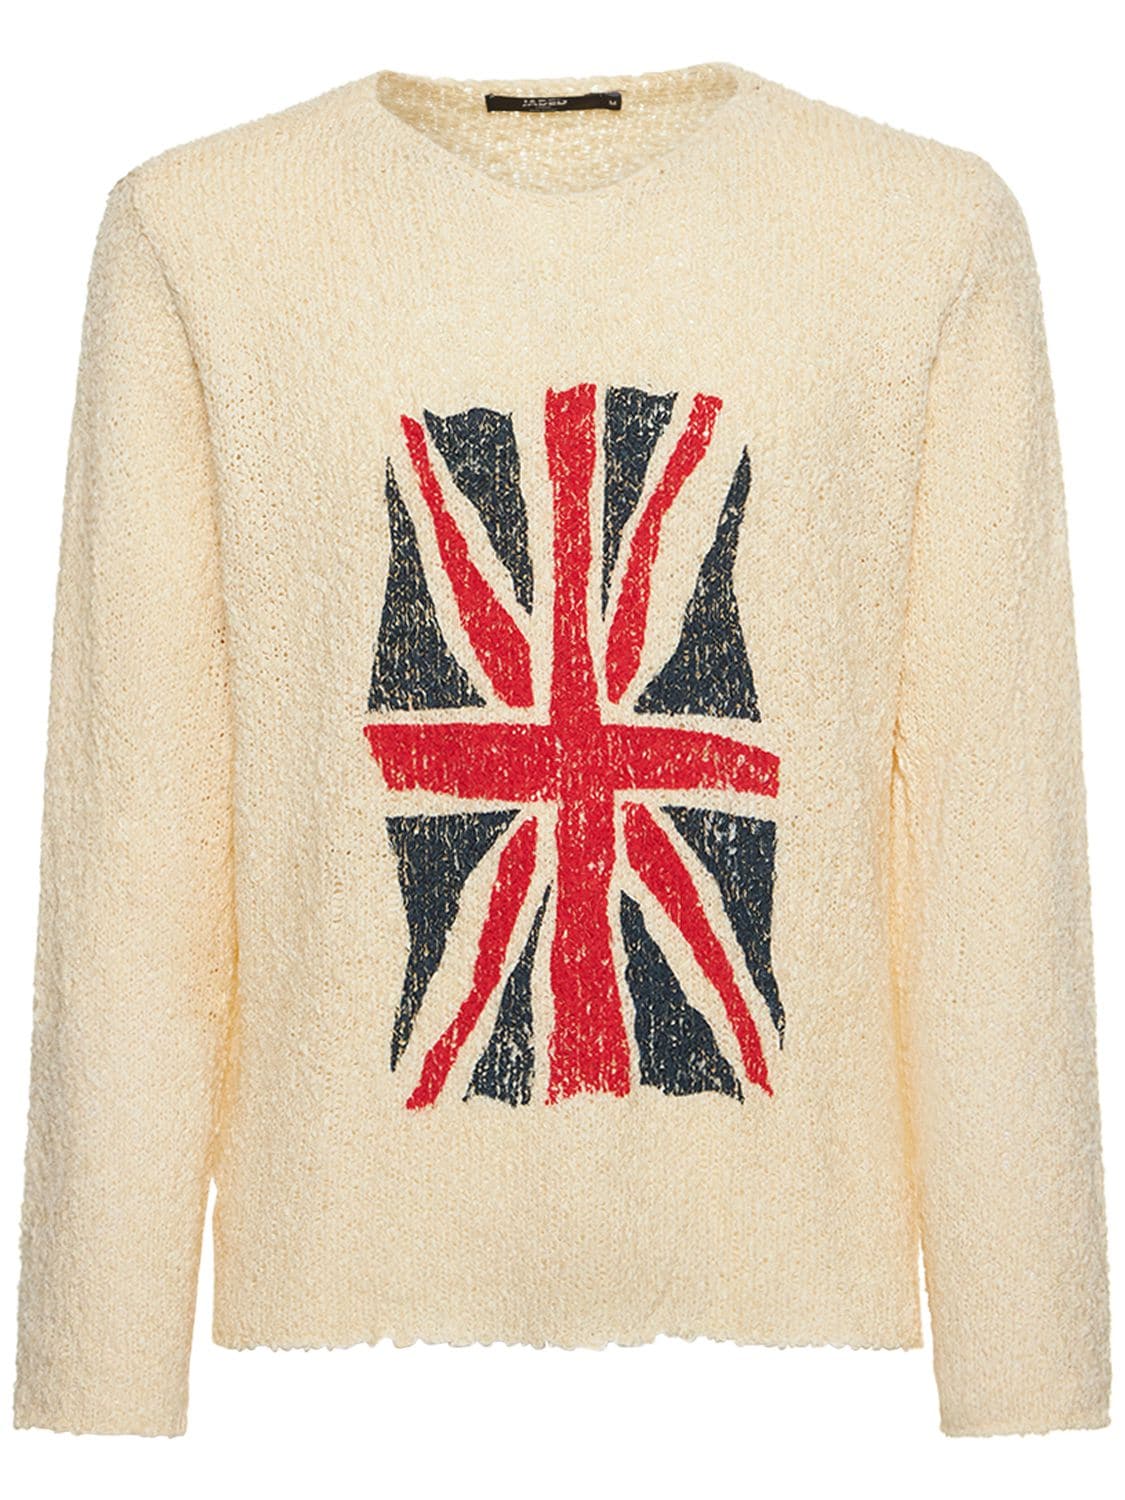 JADED LONDON Union Jack Jacquard Knit Sweater